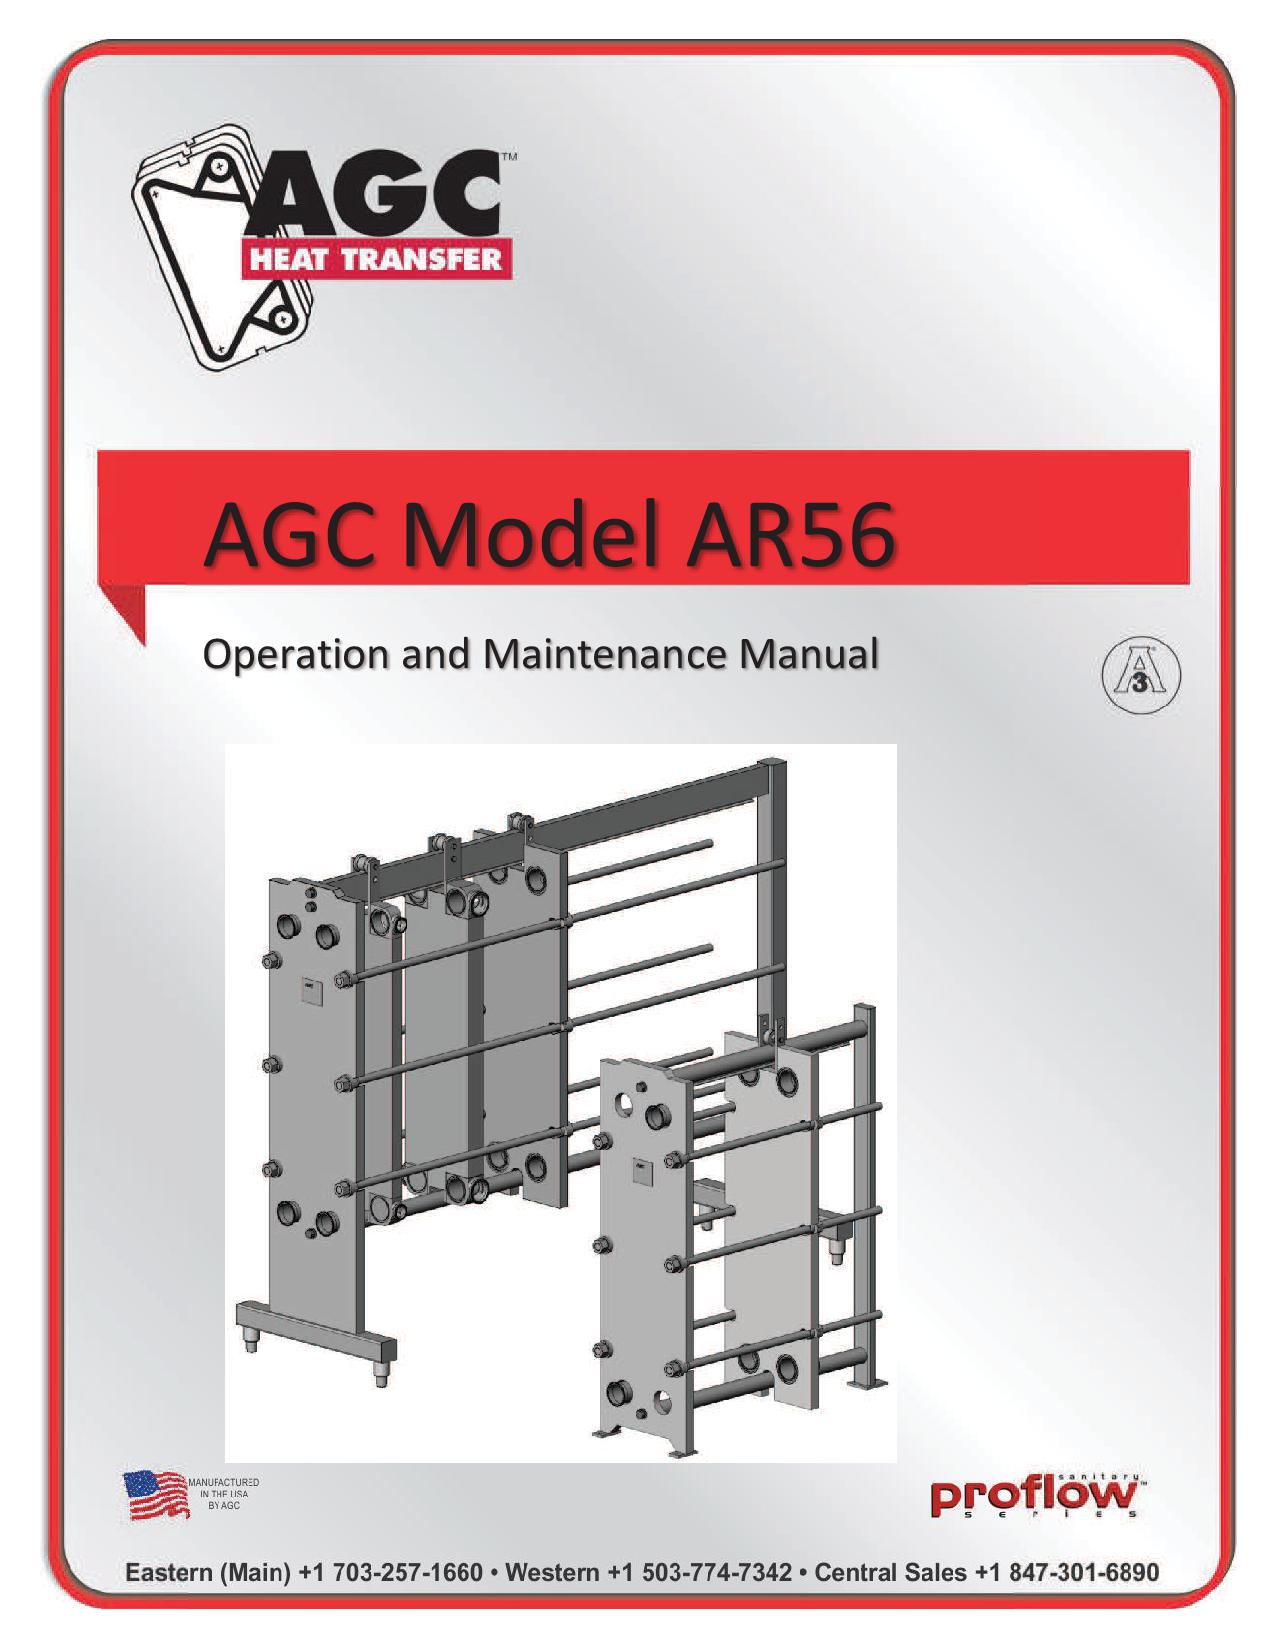 AR56 OPERATION MANUAL